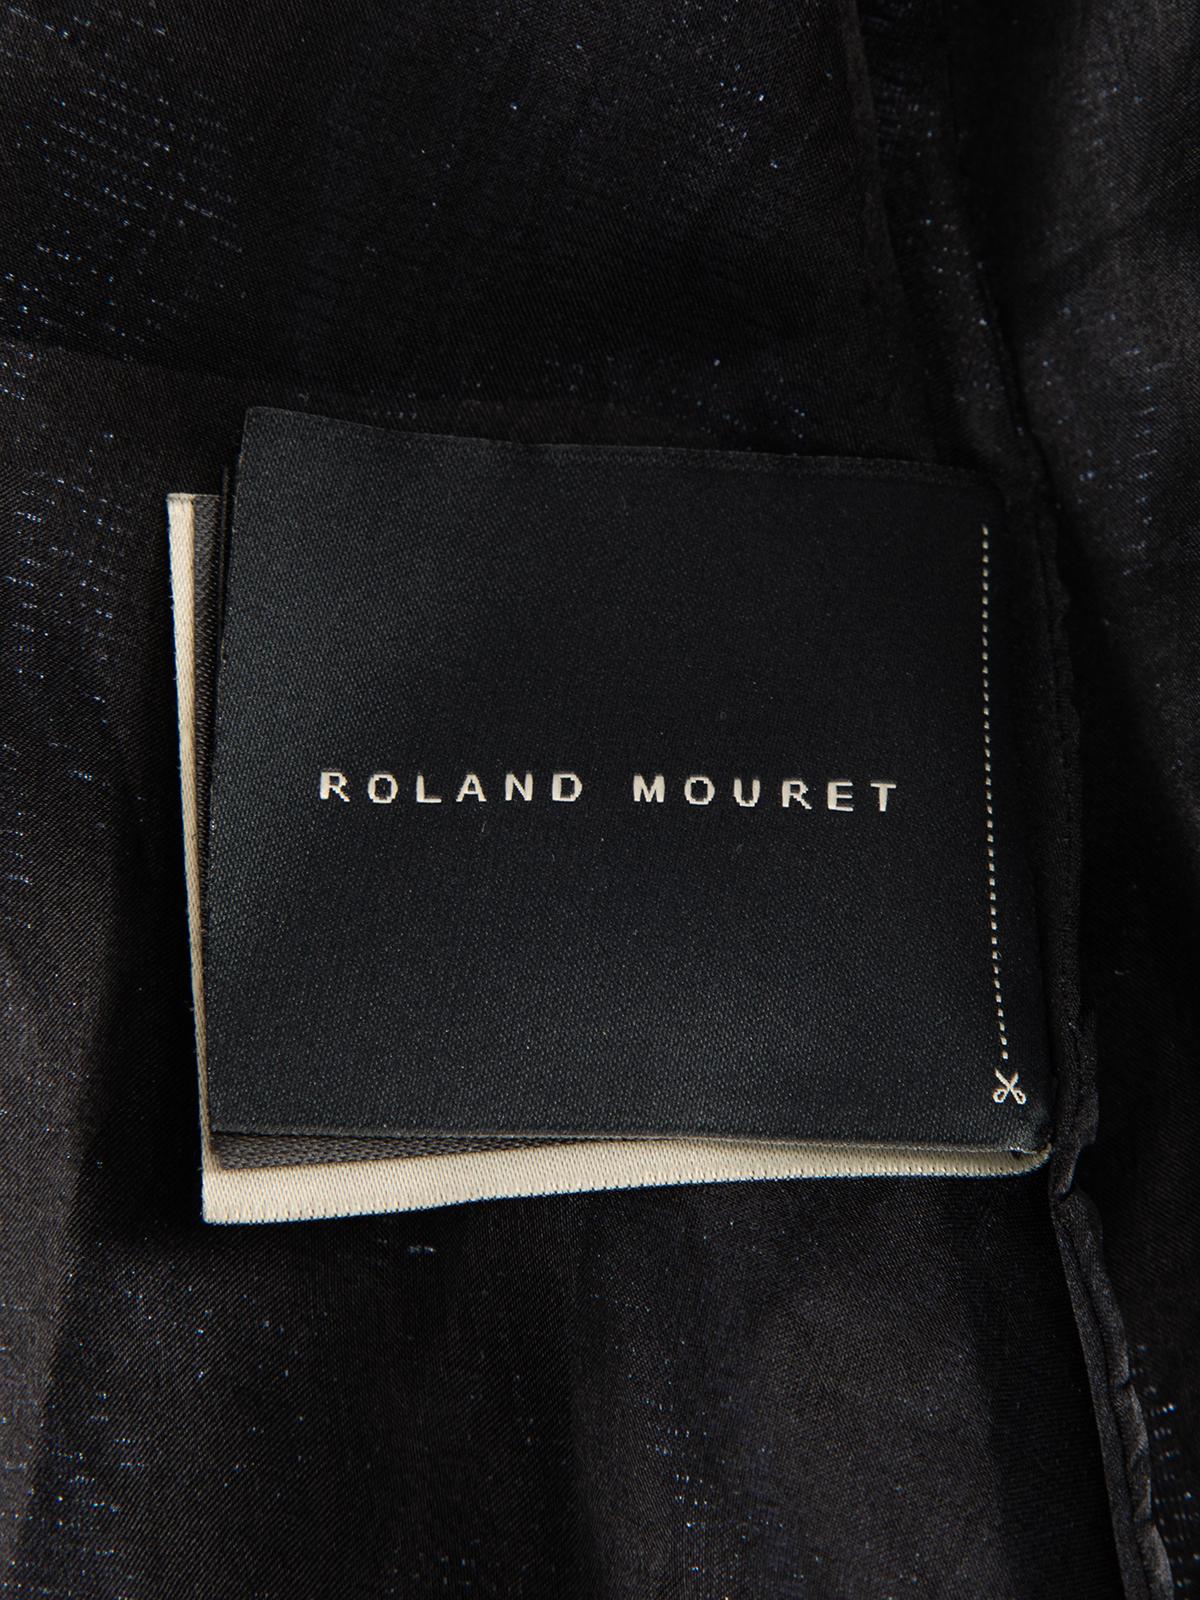 Roland Mouret Women's Strapless Lace Metallic Formal Dress 3